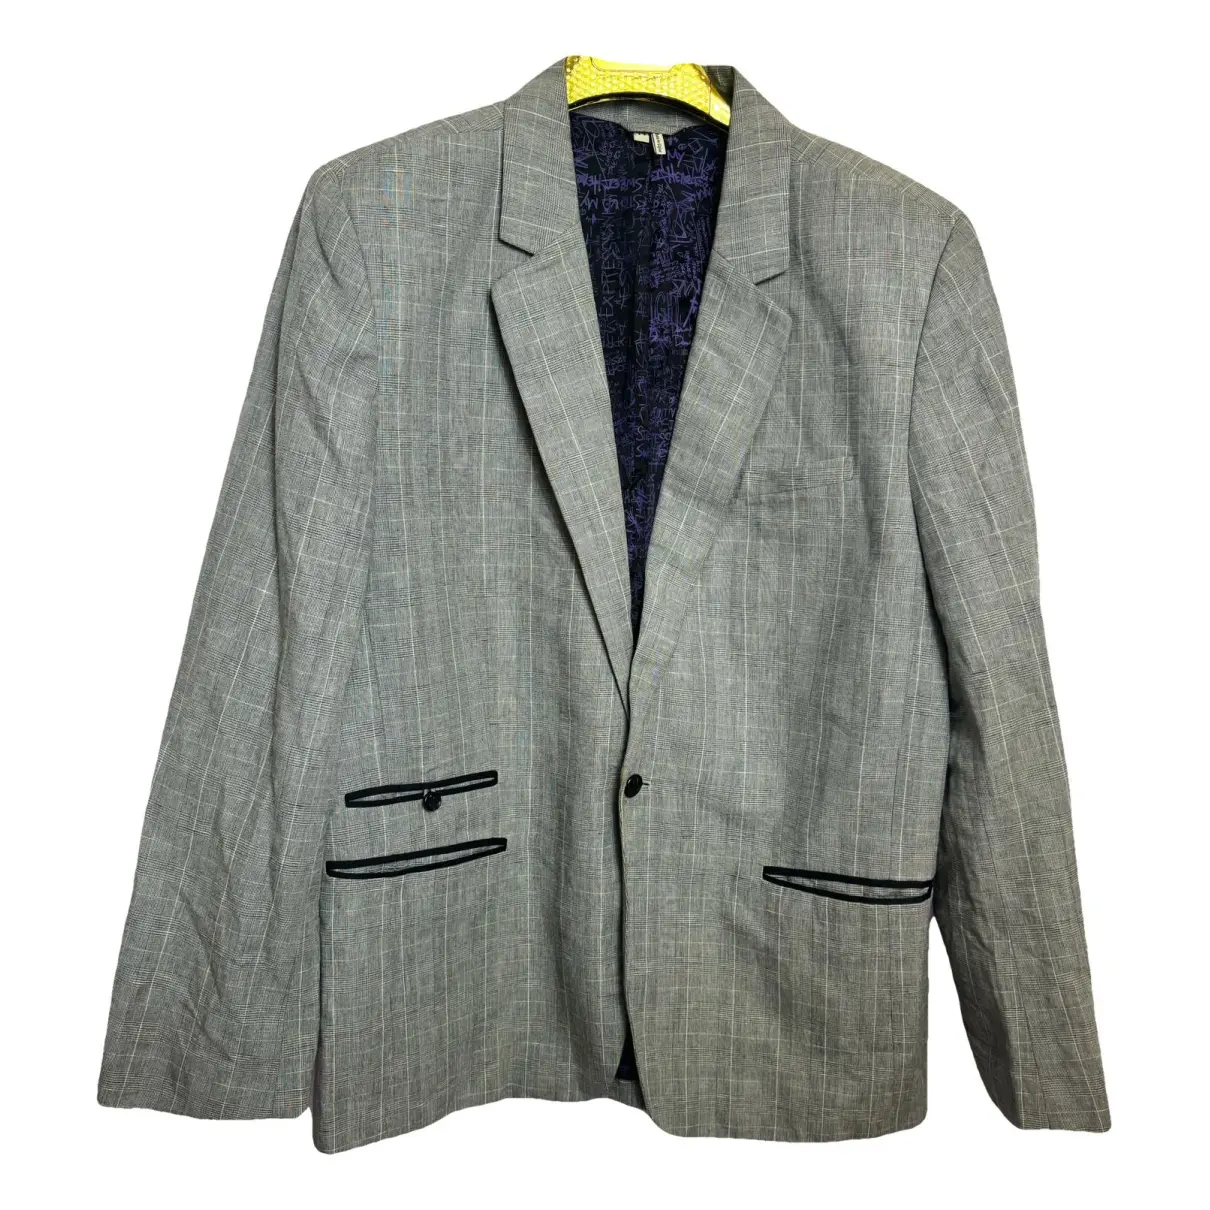 Linen jacket Juicy Couture - Vintage